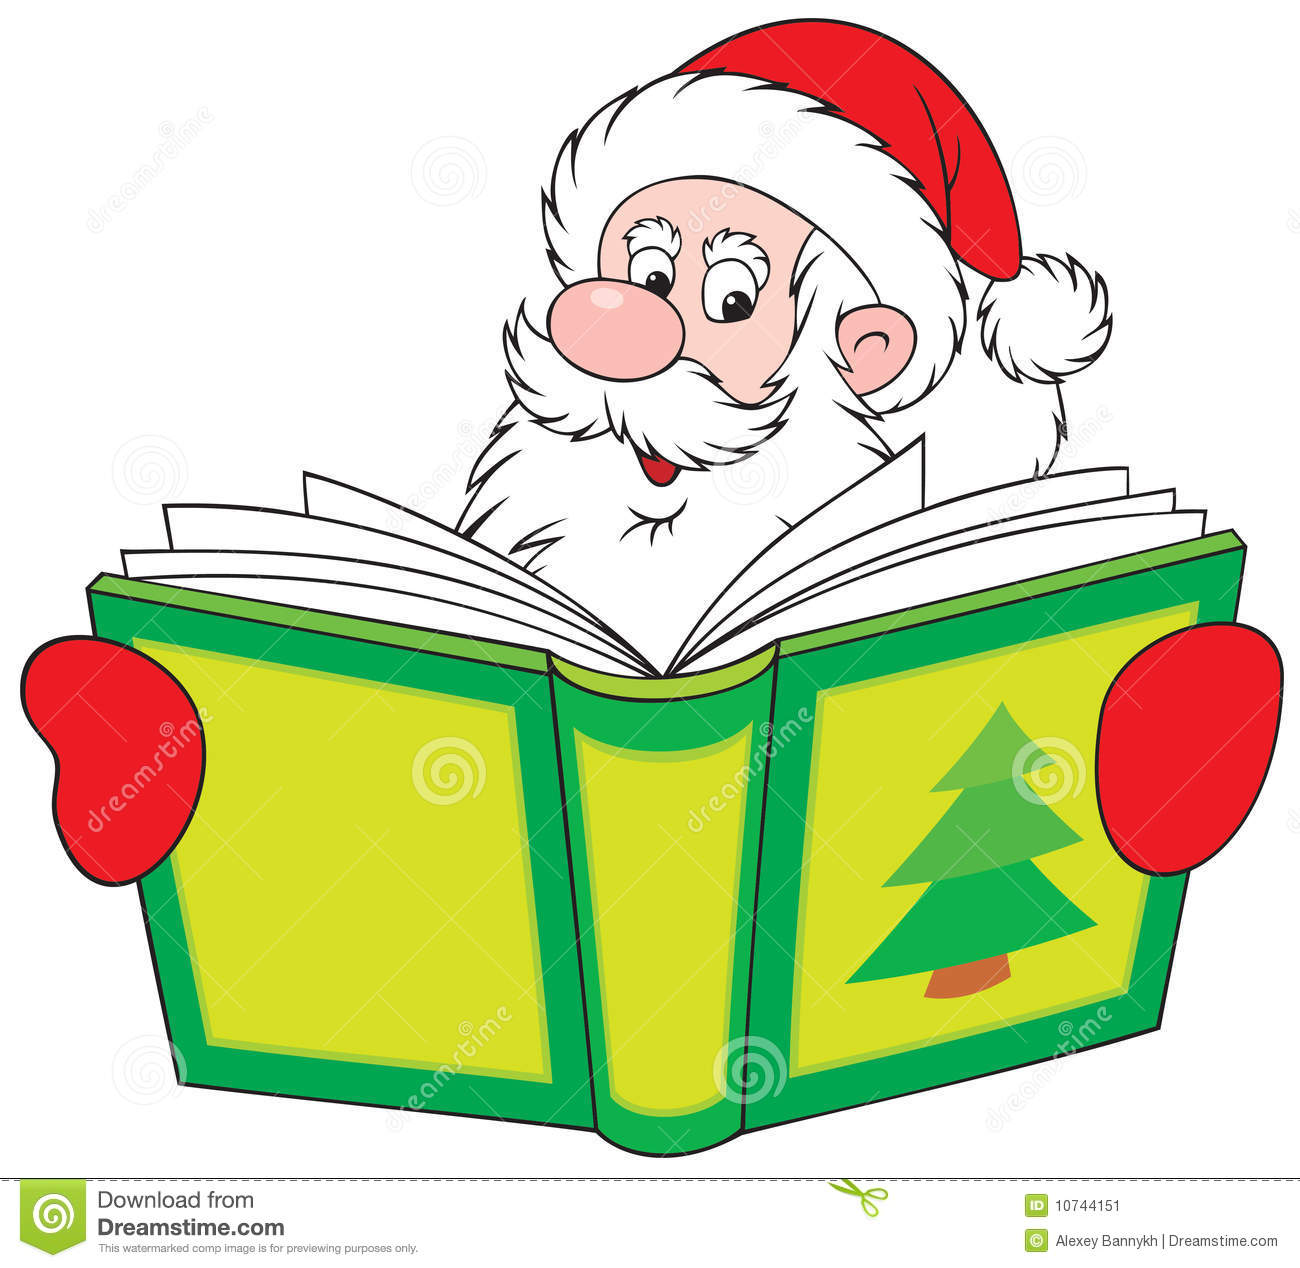 Santa Claus Reading The Book Stock Image   Image  10744151